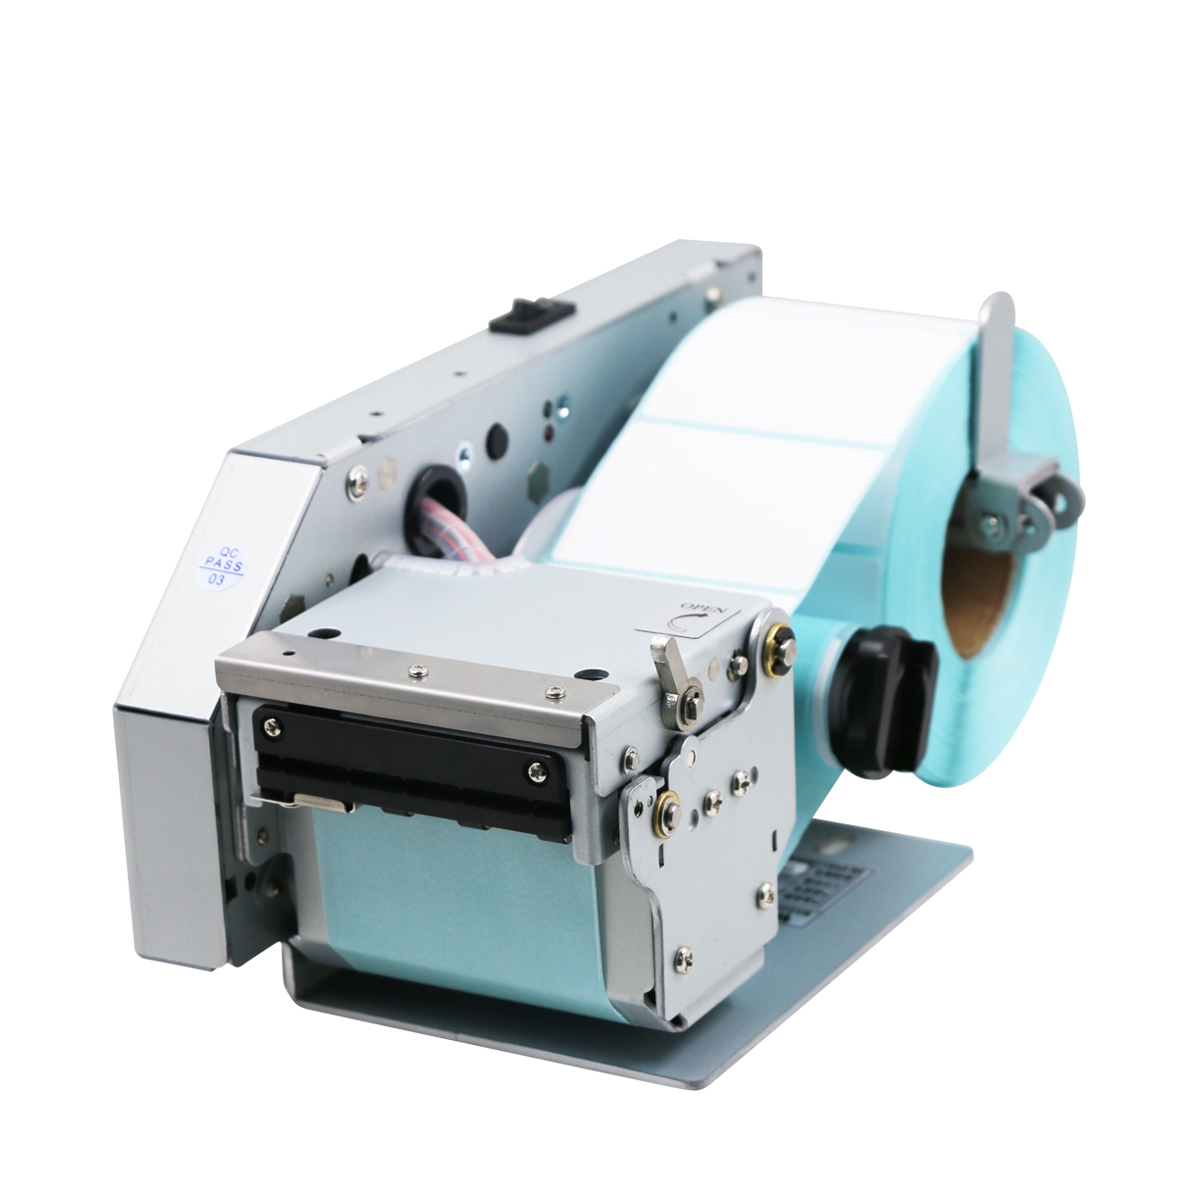 industrial oem 58mm Thermal transfer label printer